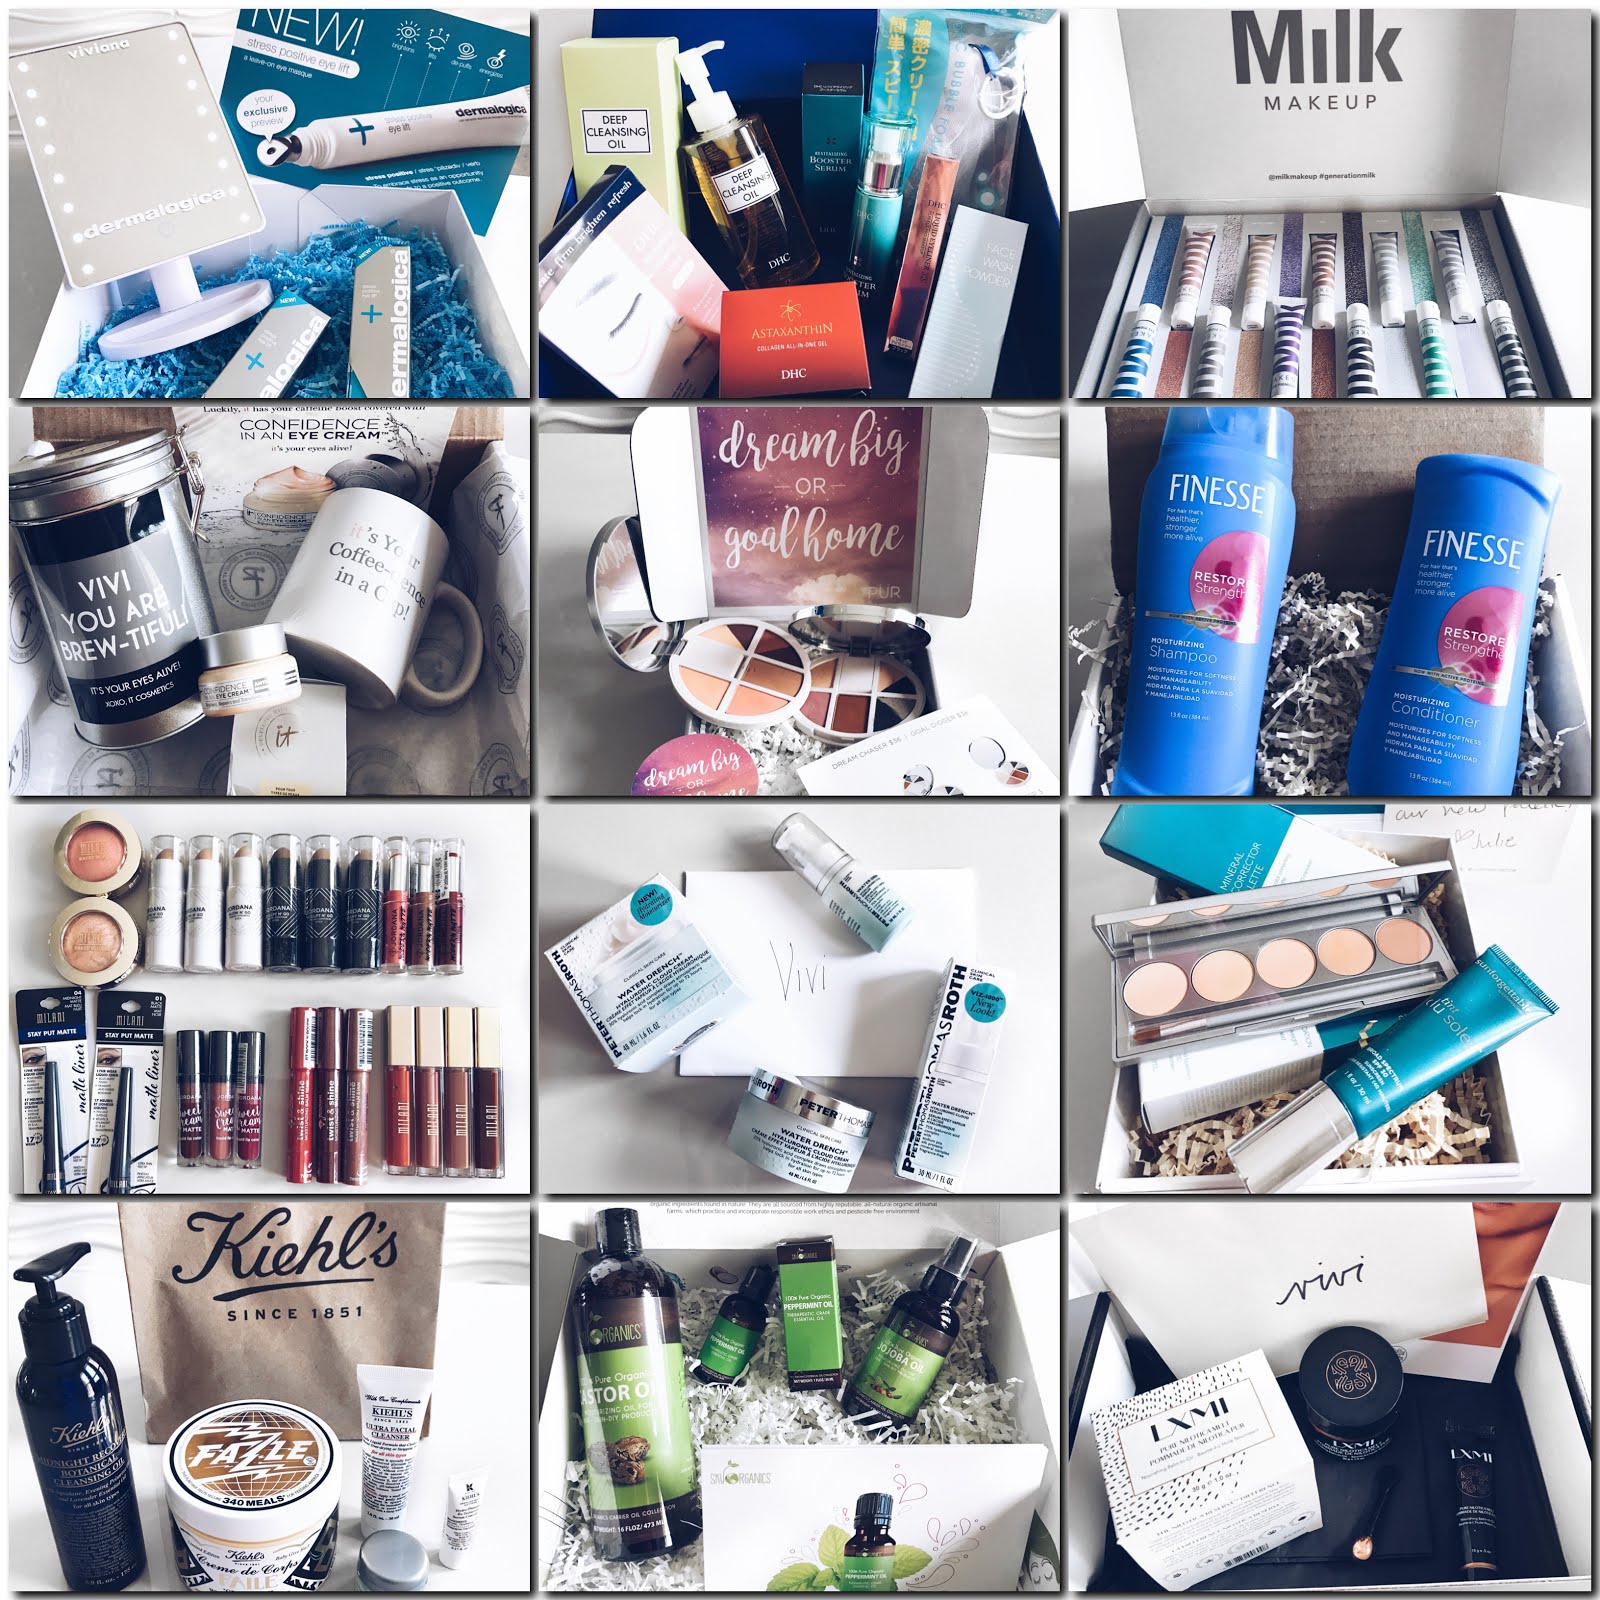 POM-Mail-Dermalogica-Pur-Cosmetics-Milk-Makeup-Sky-Organics-Milani-Cosmetics-and-More-Vivi-Brizuela-PinkOrchidMakeup